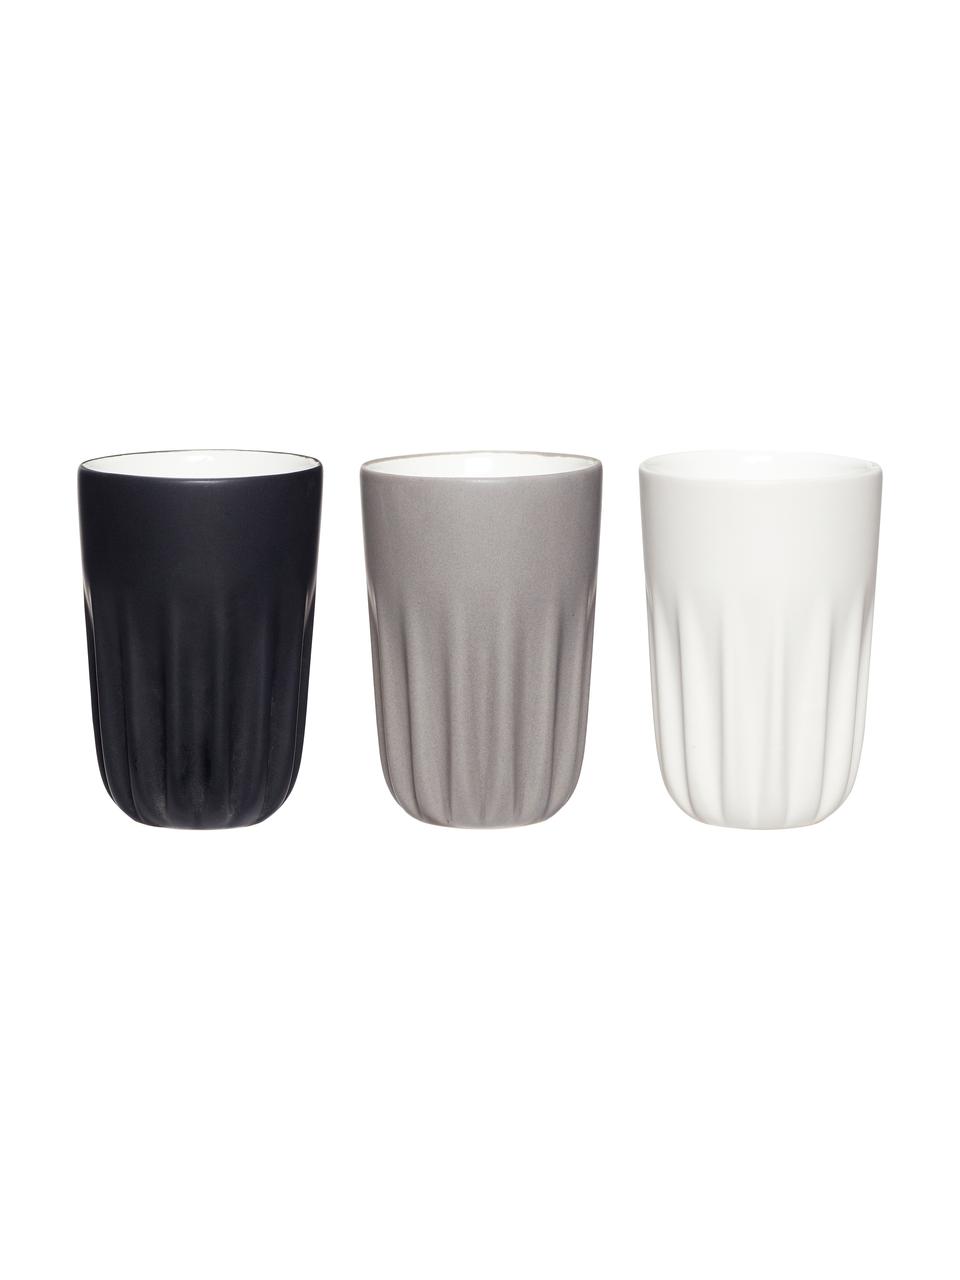 Keramik-Becher Erlang, 3er-Set, Keramik, Weiß, Schwarz, Grau, Ø 8 x H 12 cm